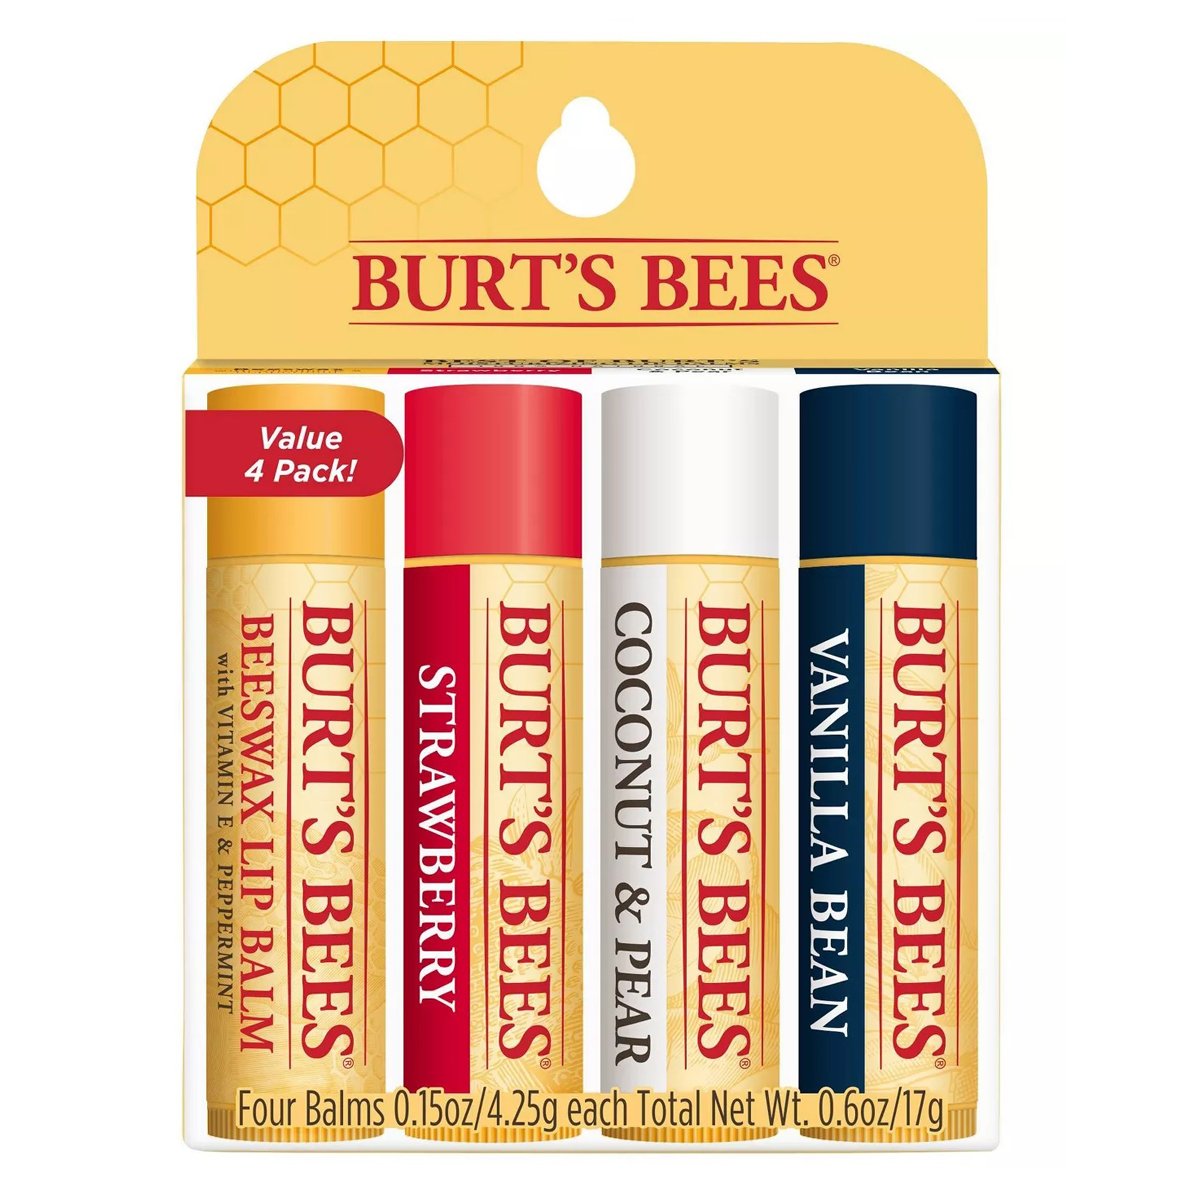 Burt's Bees Value 4 Pack Lip Balm Set